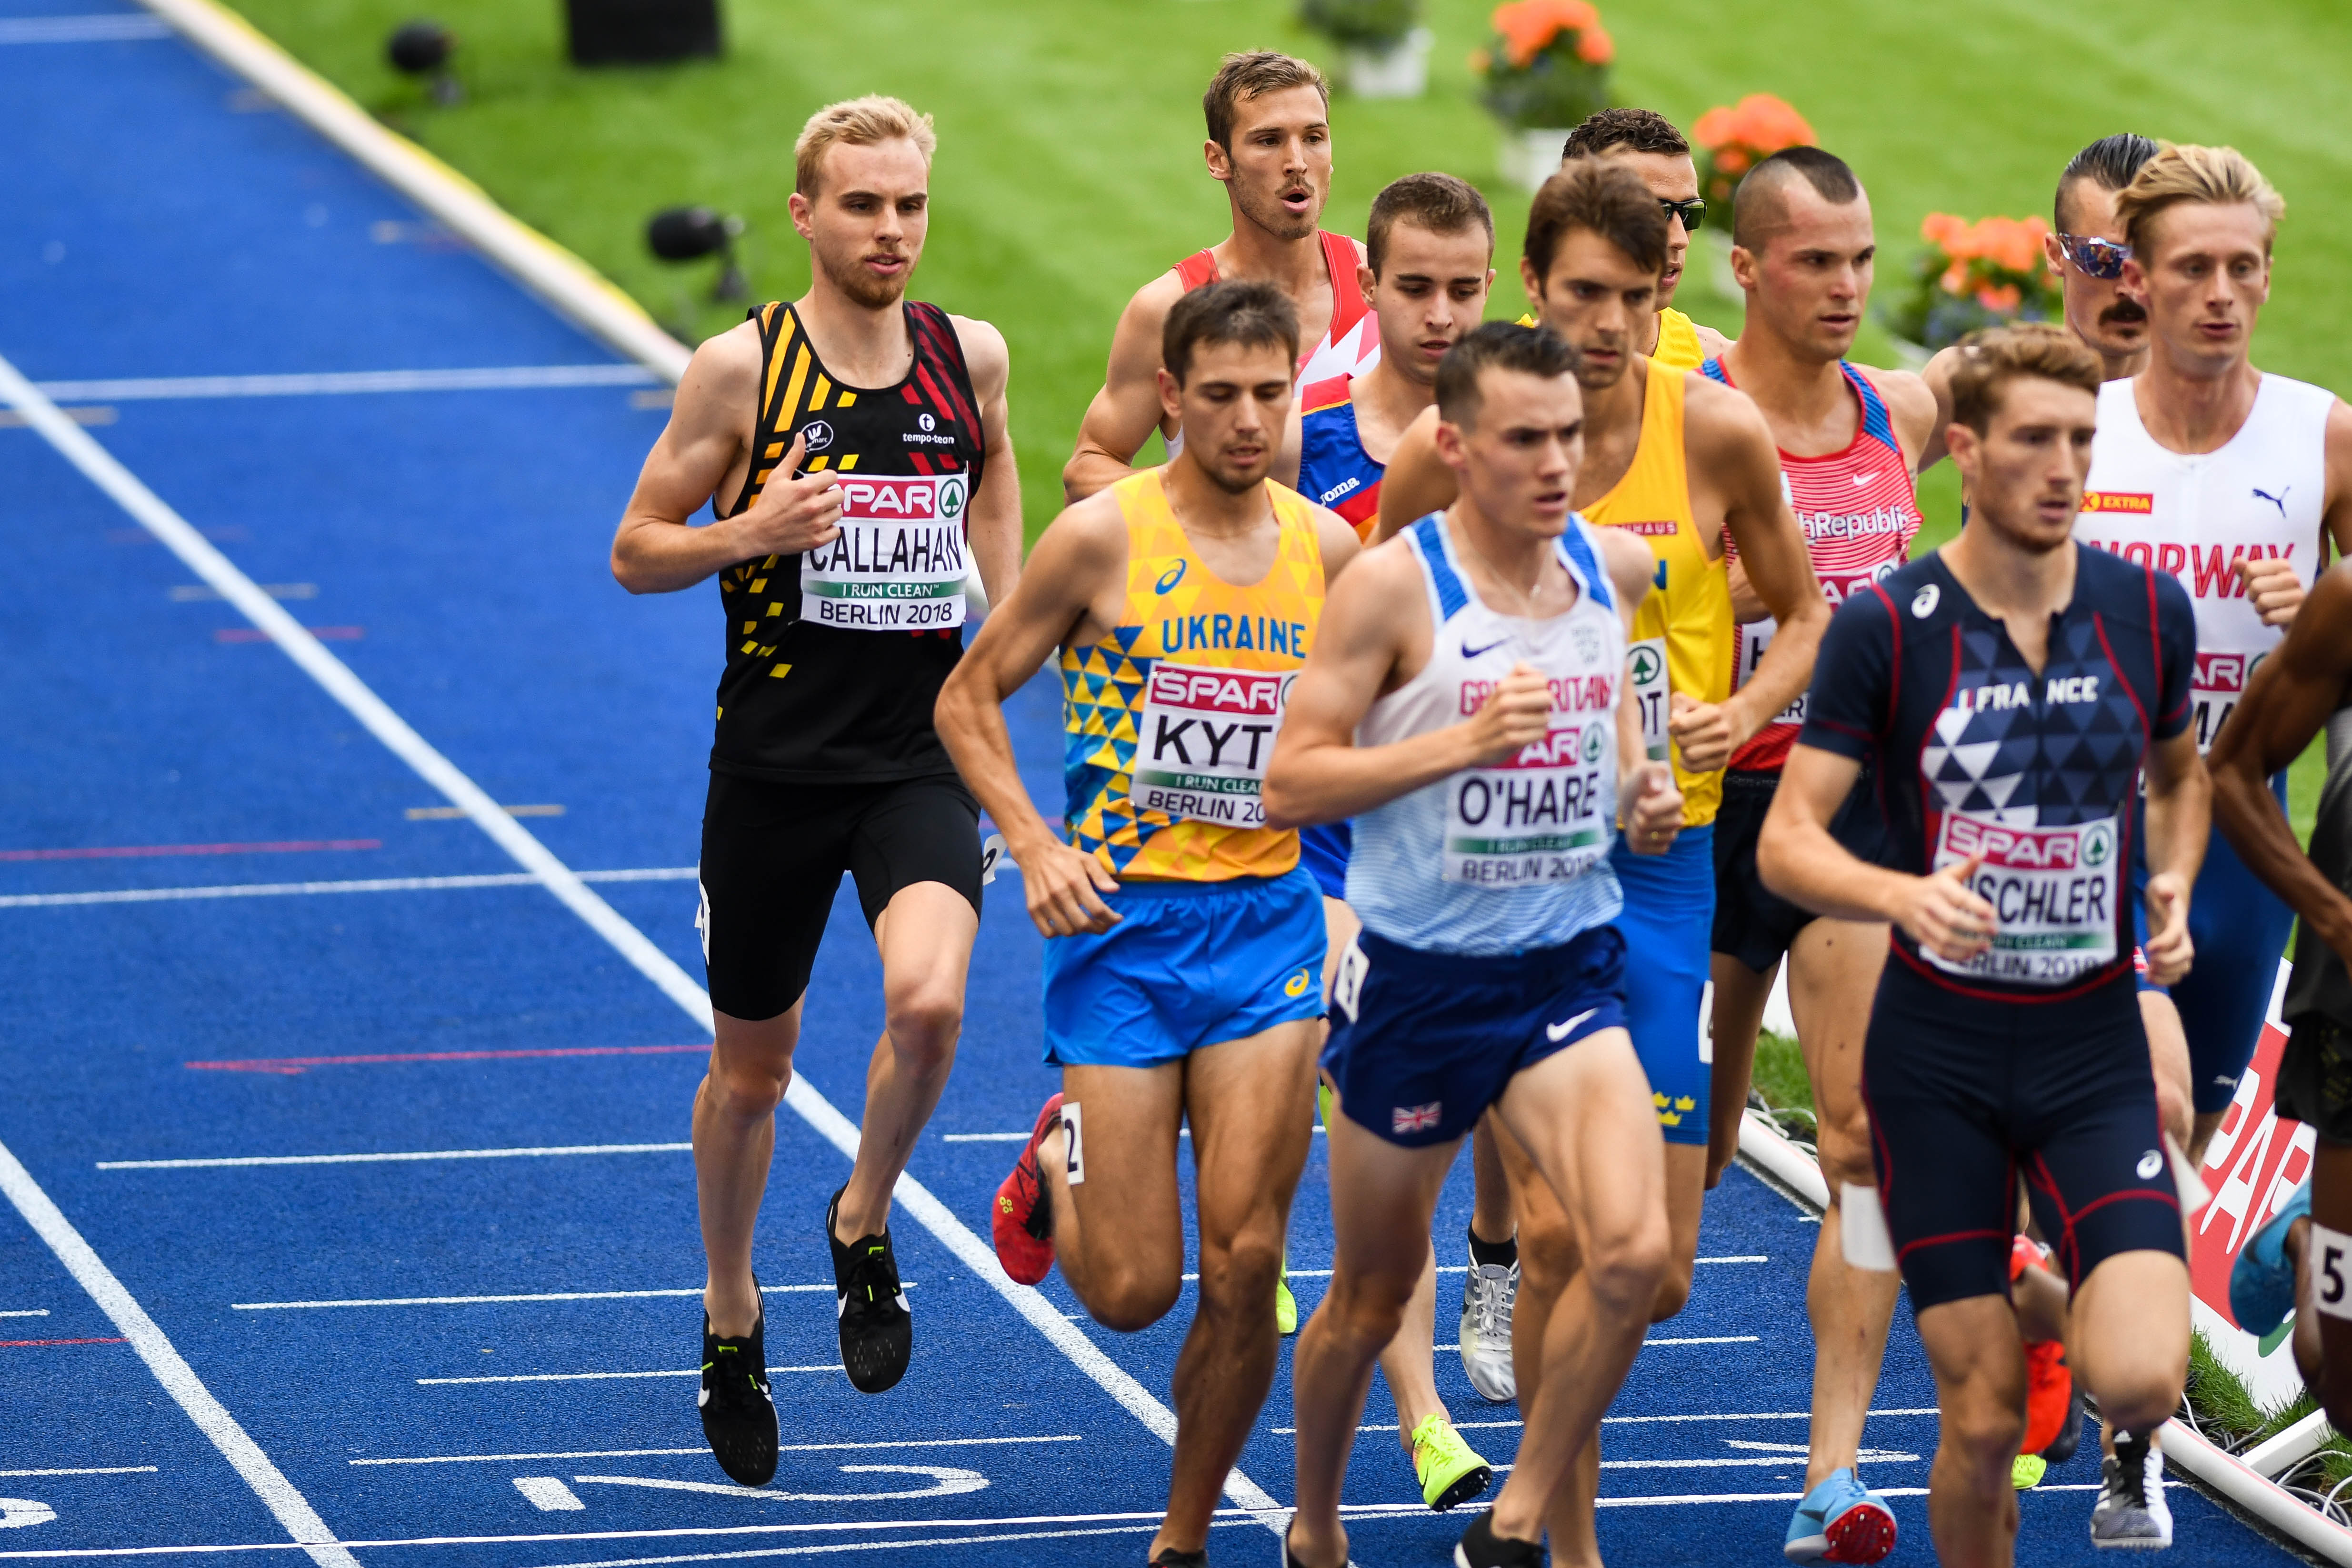 Peter Callahan 1500m Berlijn 2018